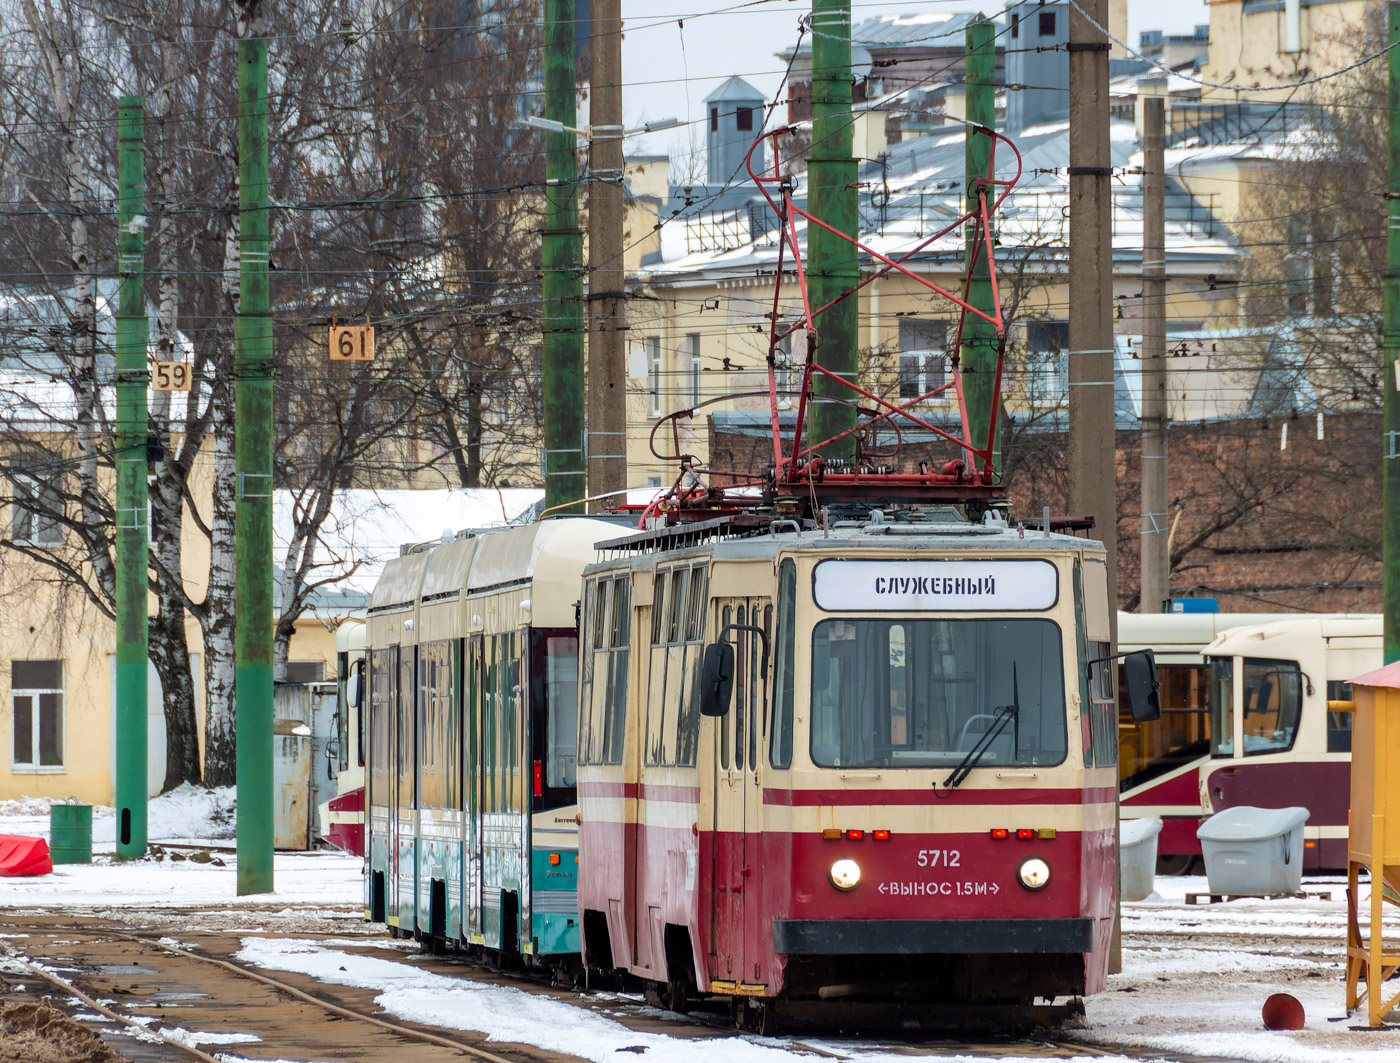 Санкт-Петербург, ПР (18М) № 5712; Санкт-Петербург — Новые трамвайные вагоны